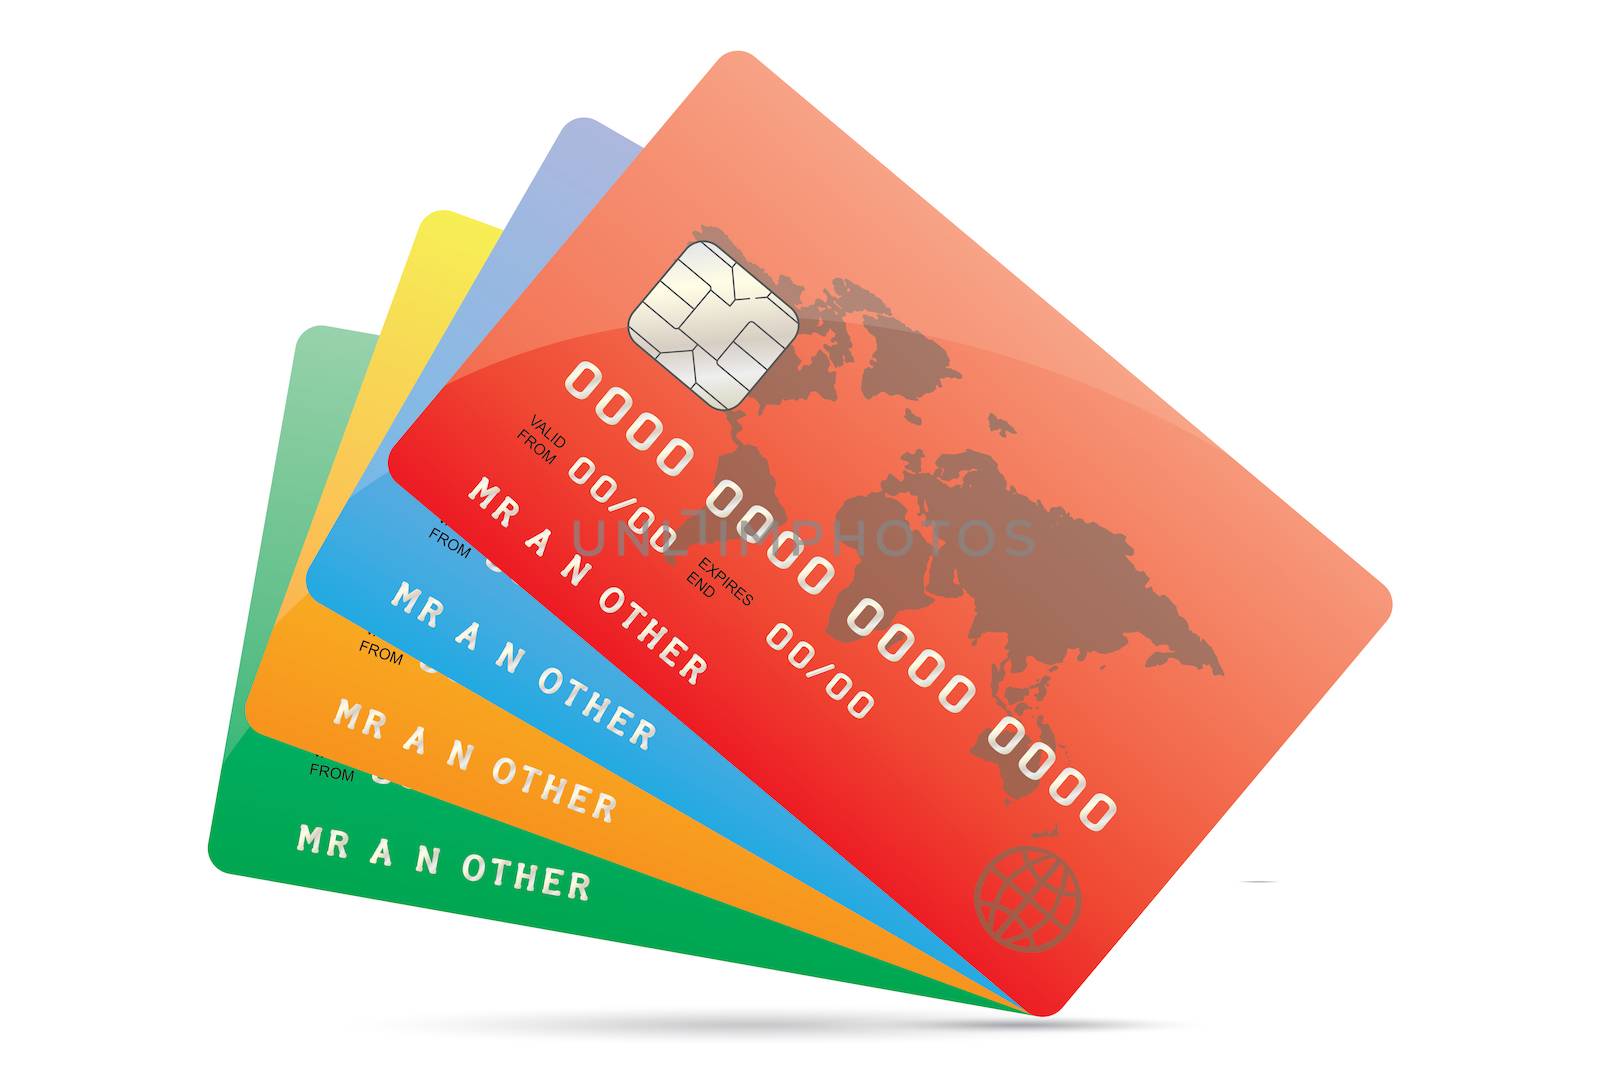 Illustration of Credit Cards by DragonEyeMedia